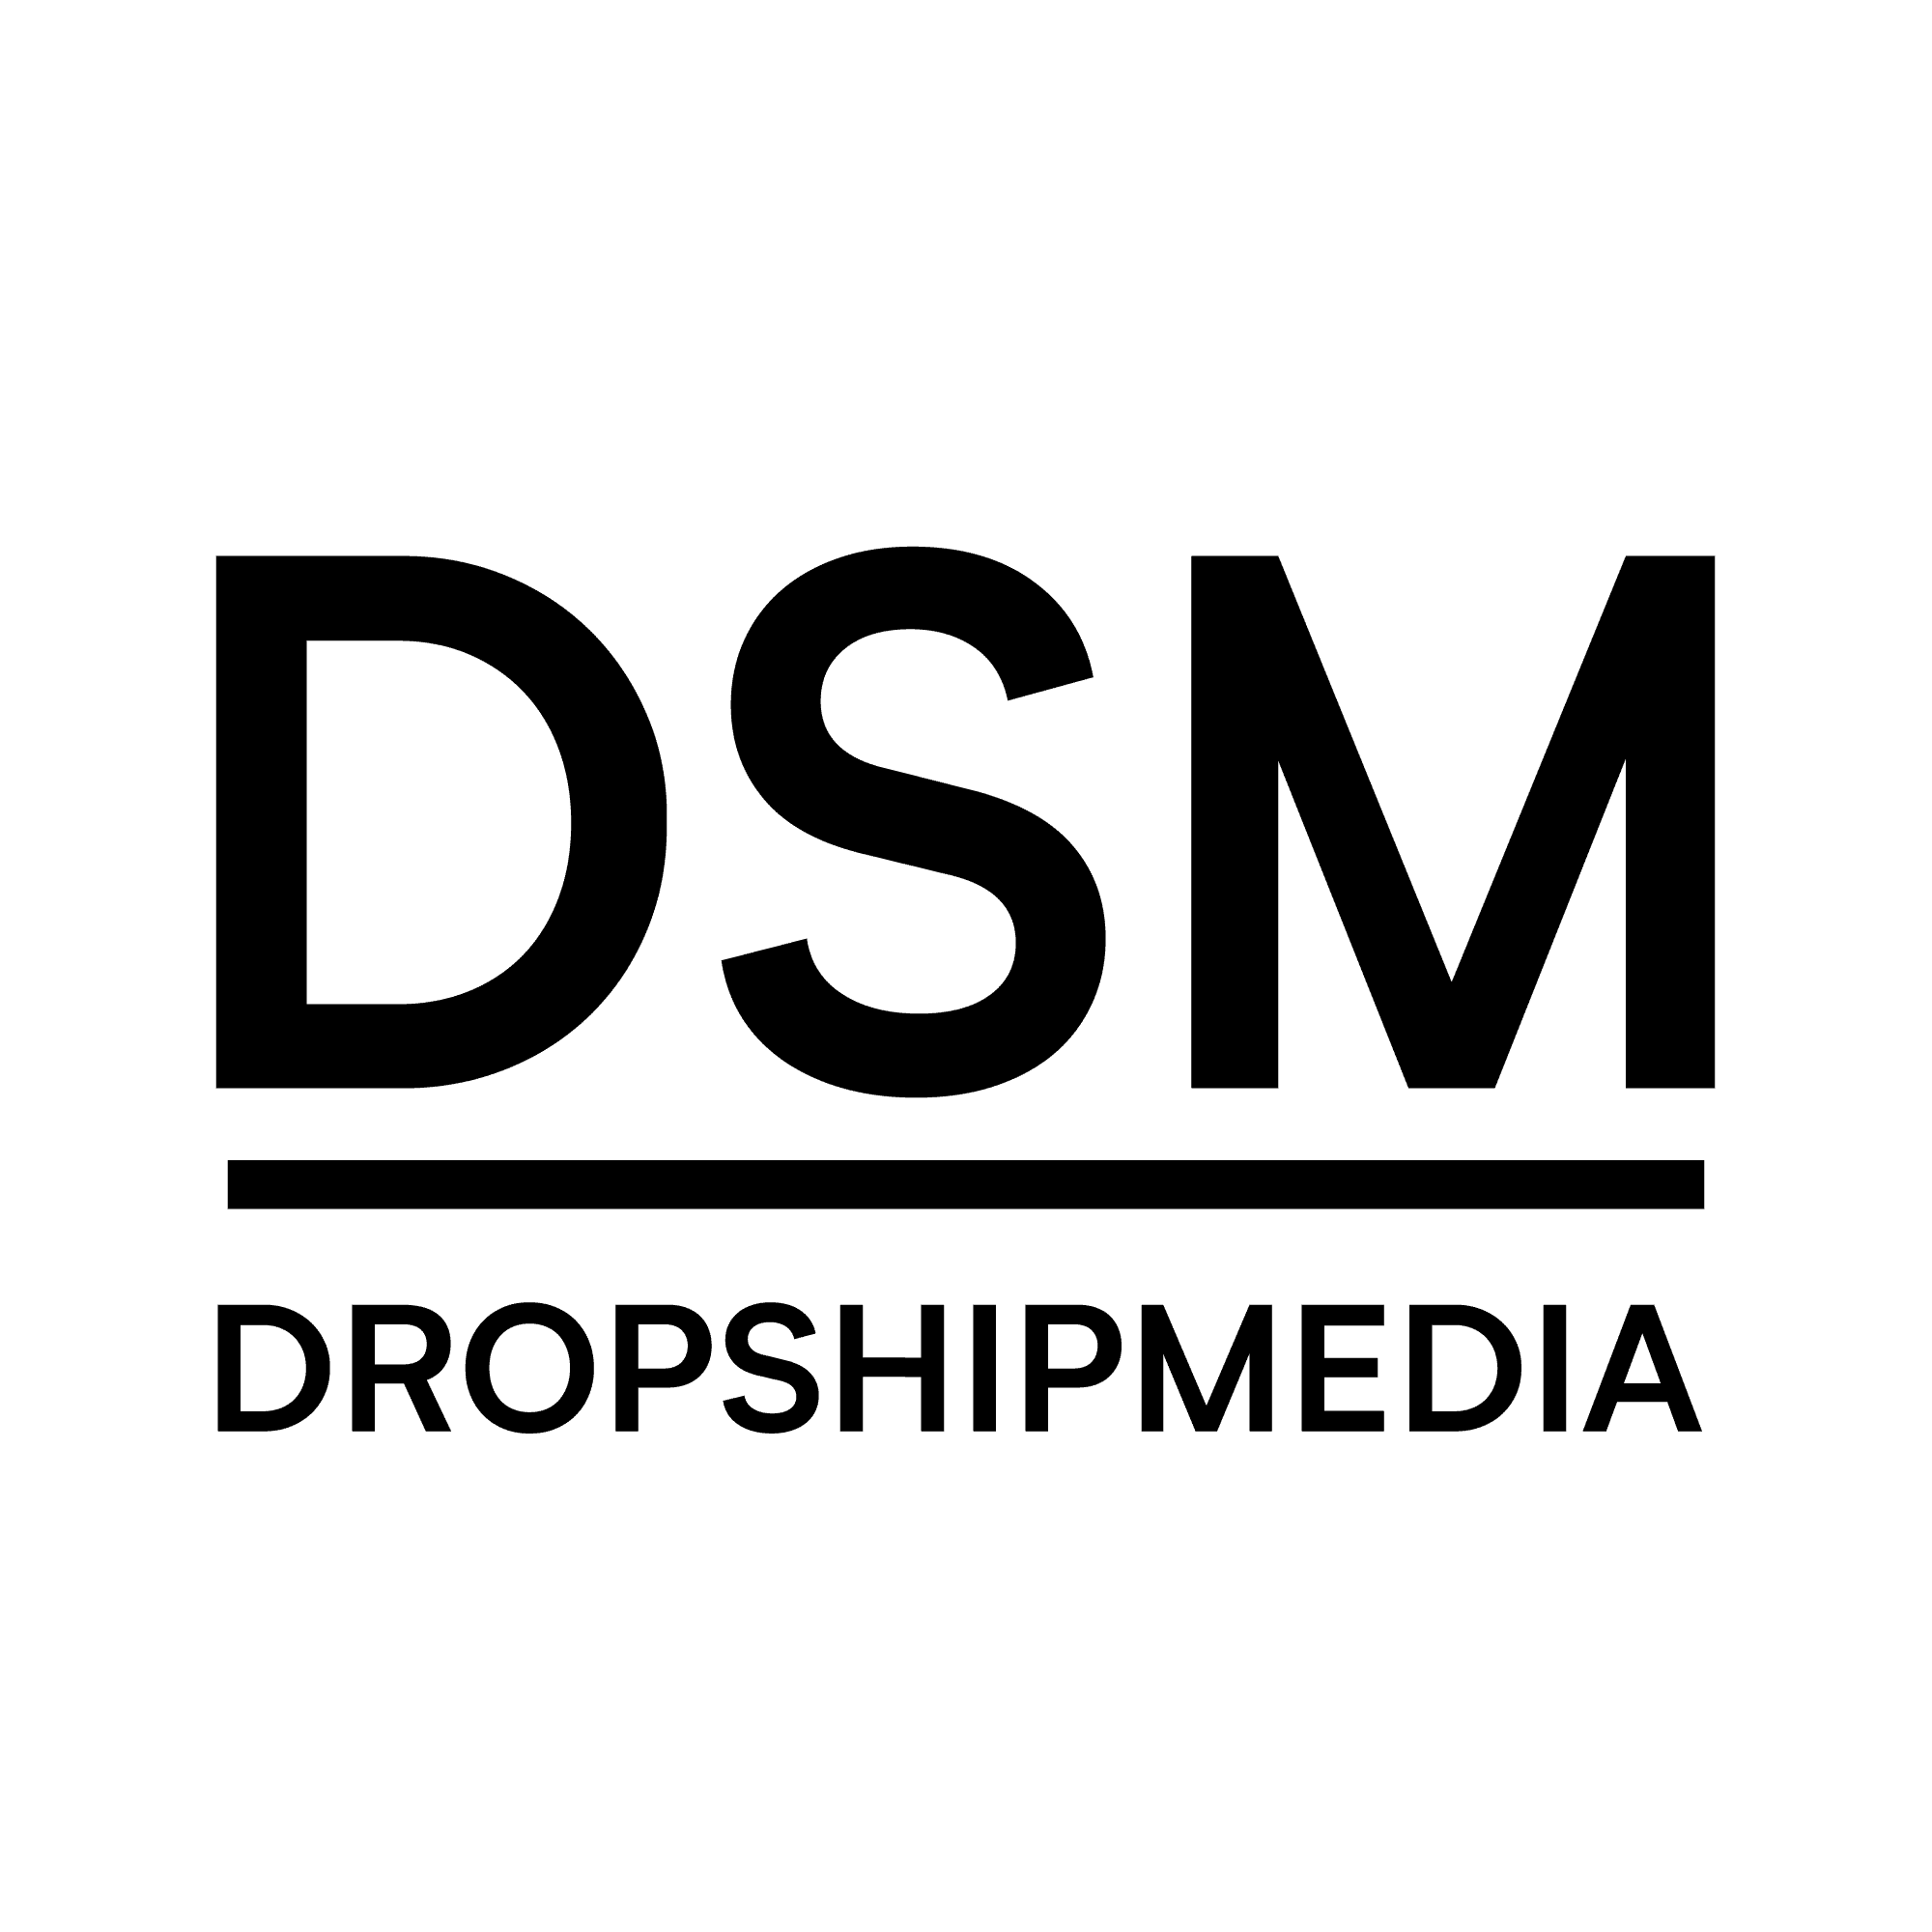 dropshipmedia dropshipping video ads service